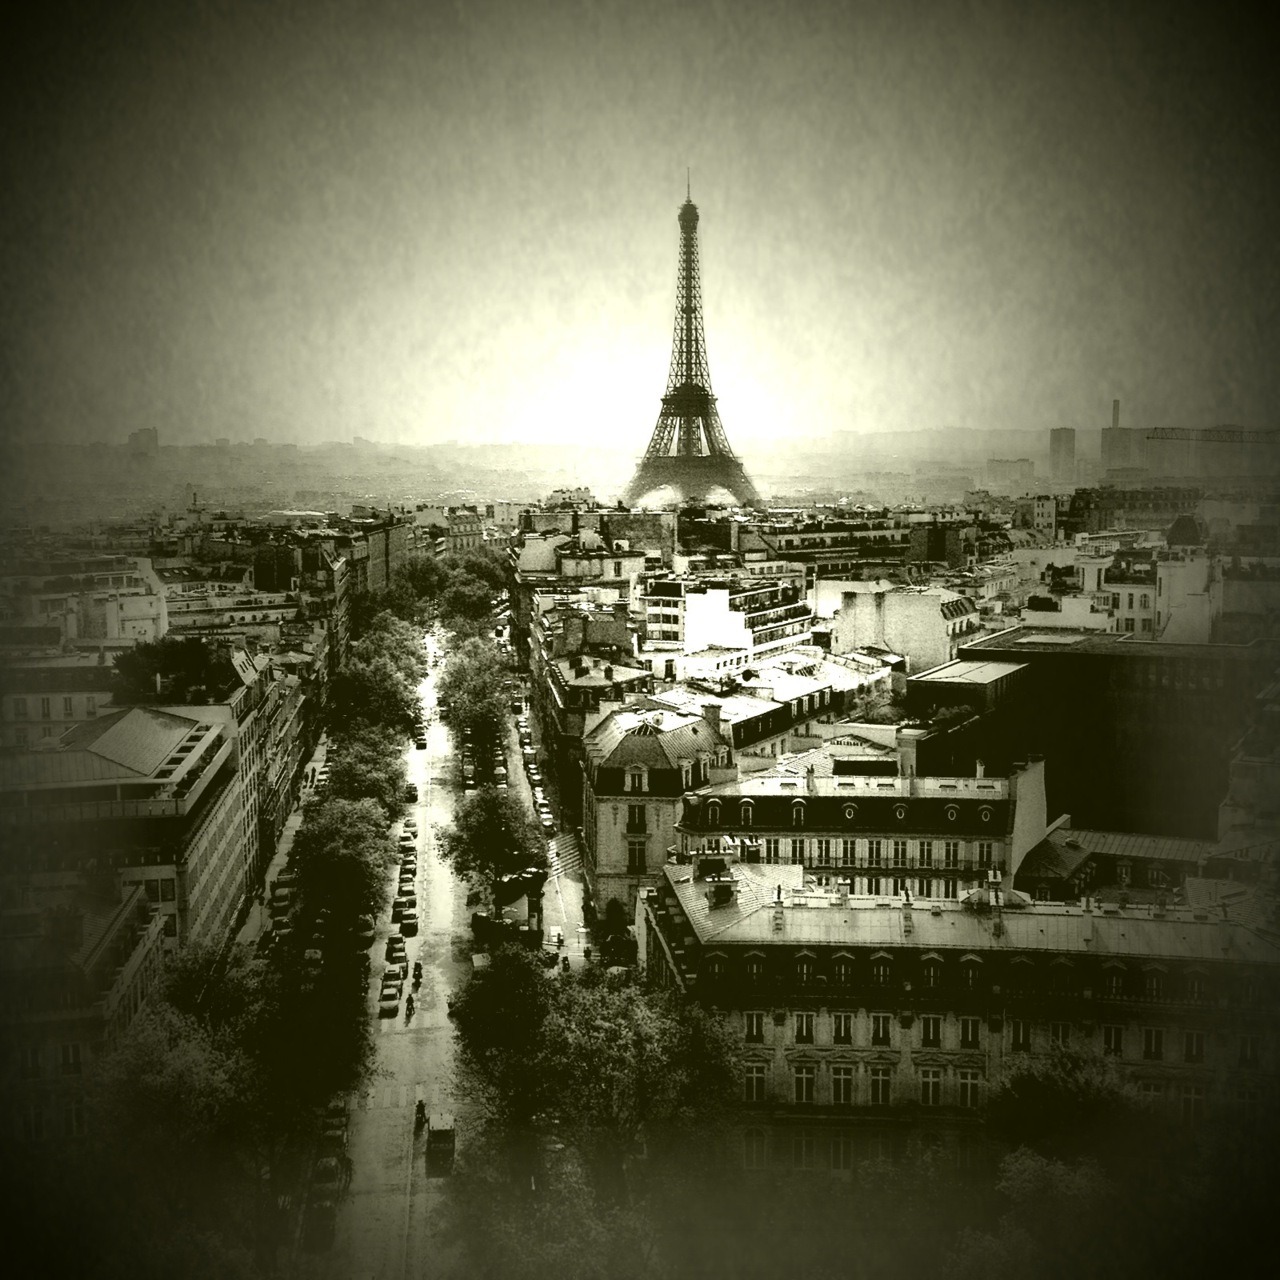 fxphotostudioshow:
“ View of the Arc de Triomphe by Nathalie Geffroy
Effects applied: Black&white, vignette 5, vintage aged
”